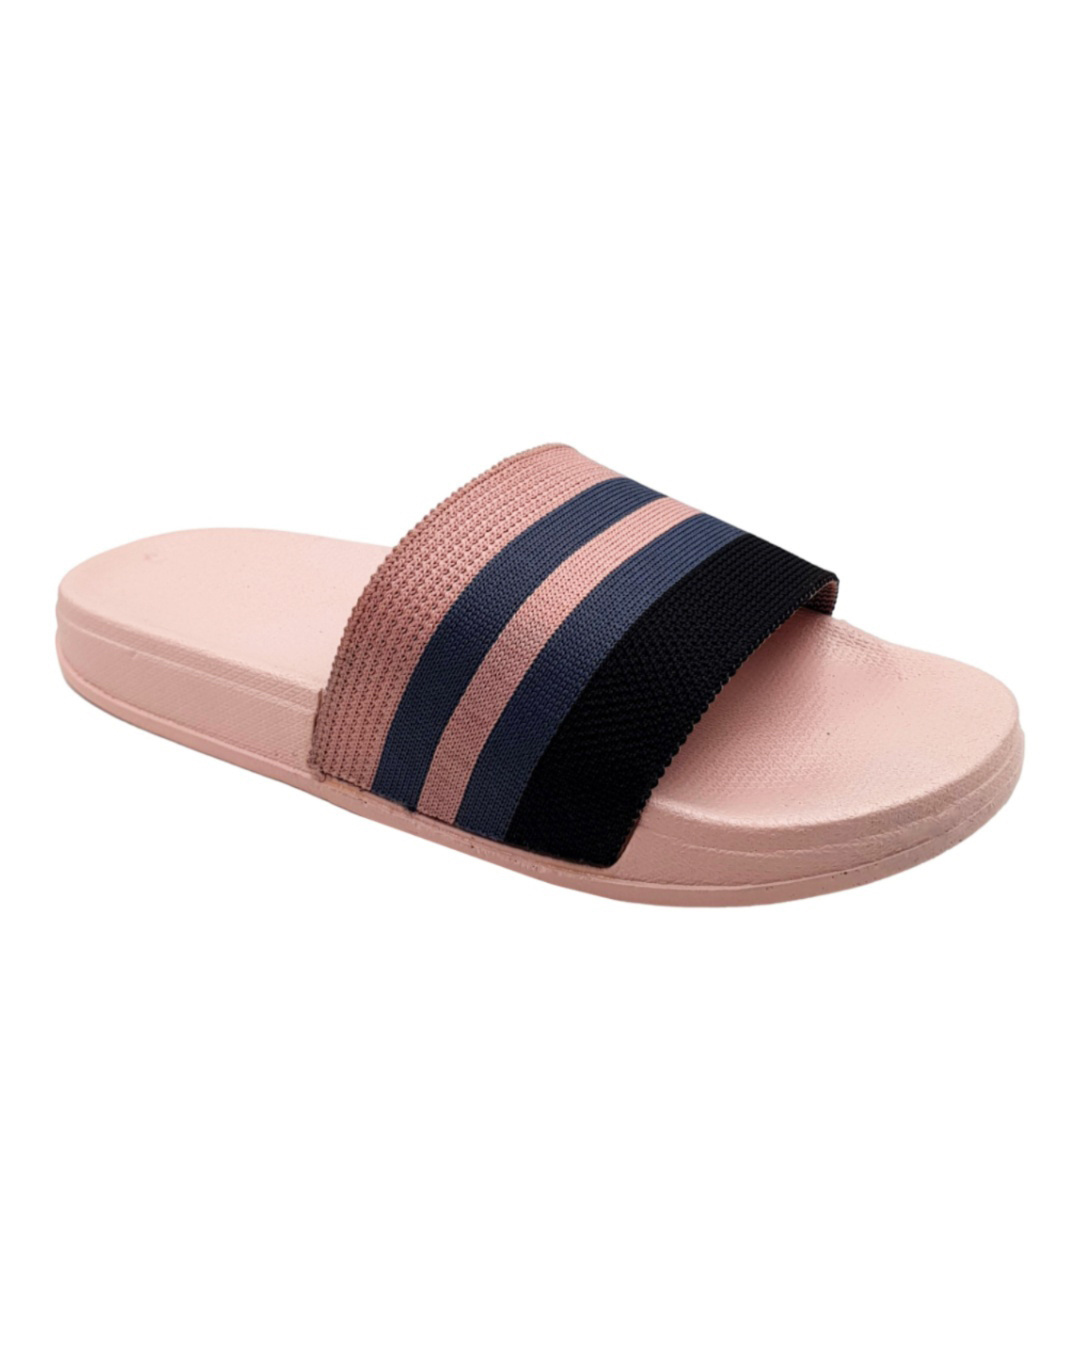 Shop Women's Pink Sliders-Back